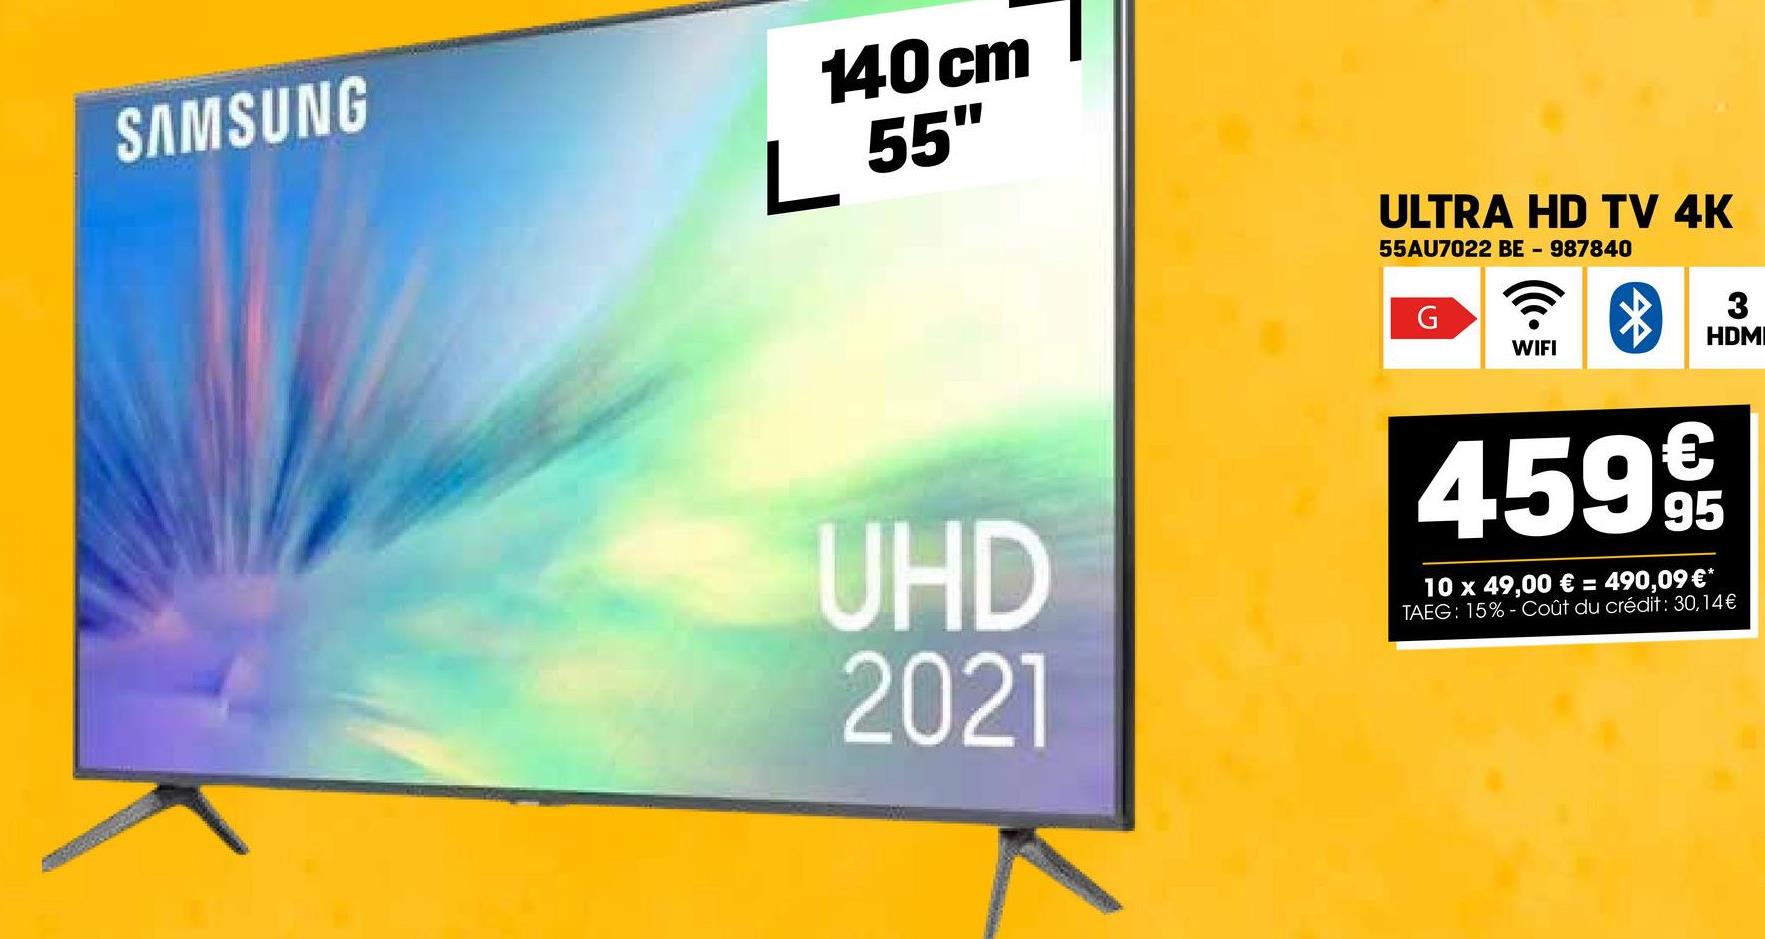 SAMSUNG
140cm
L 55"
ULTRA HD TV 4K
55AU7022 BE - 987840
G
WIFI
3
HDM
UHD
2021
4599
10 x 49,00 € = 490,09 €*
TAEG: 15%- Coût du crédit : 30,14€